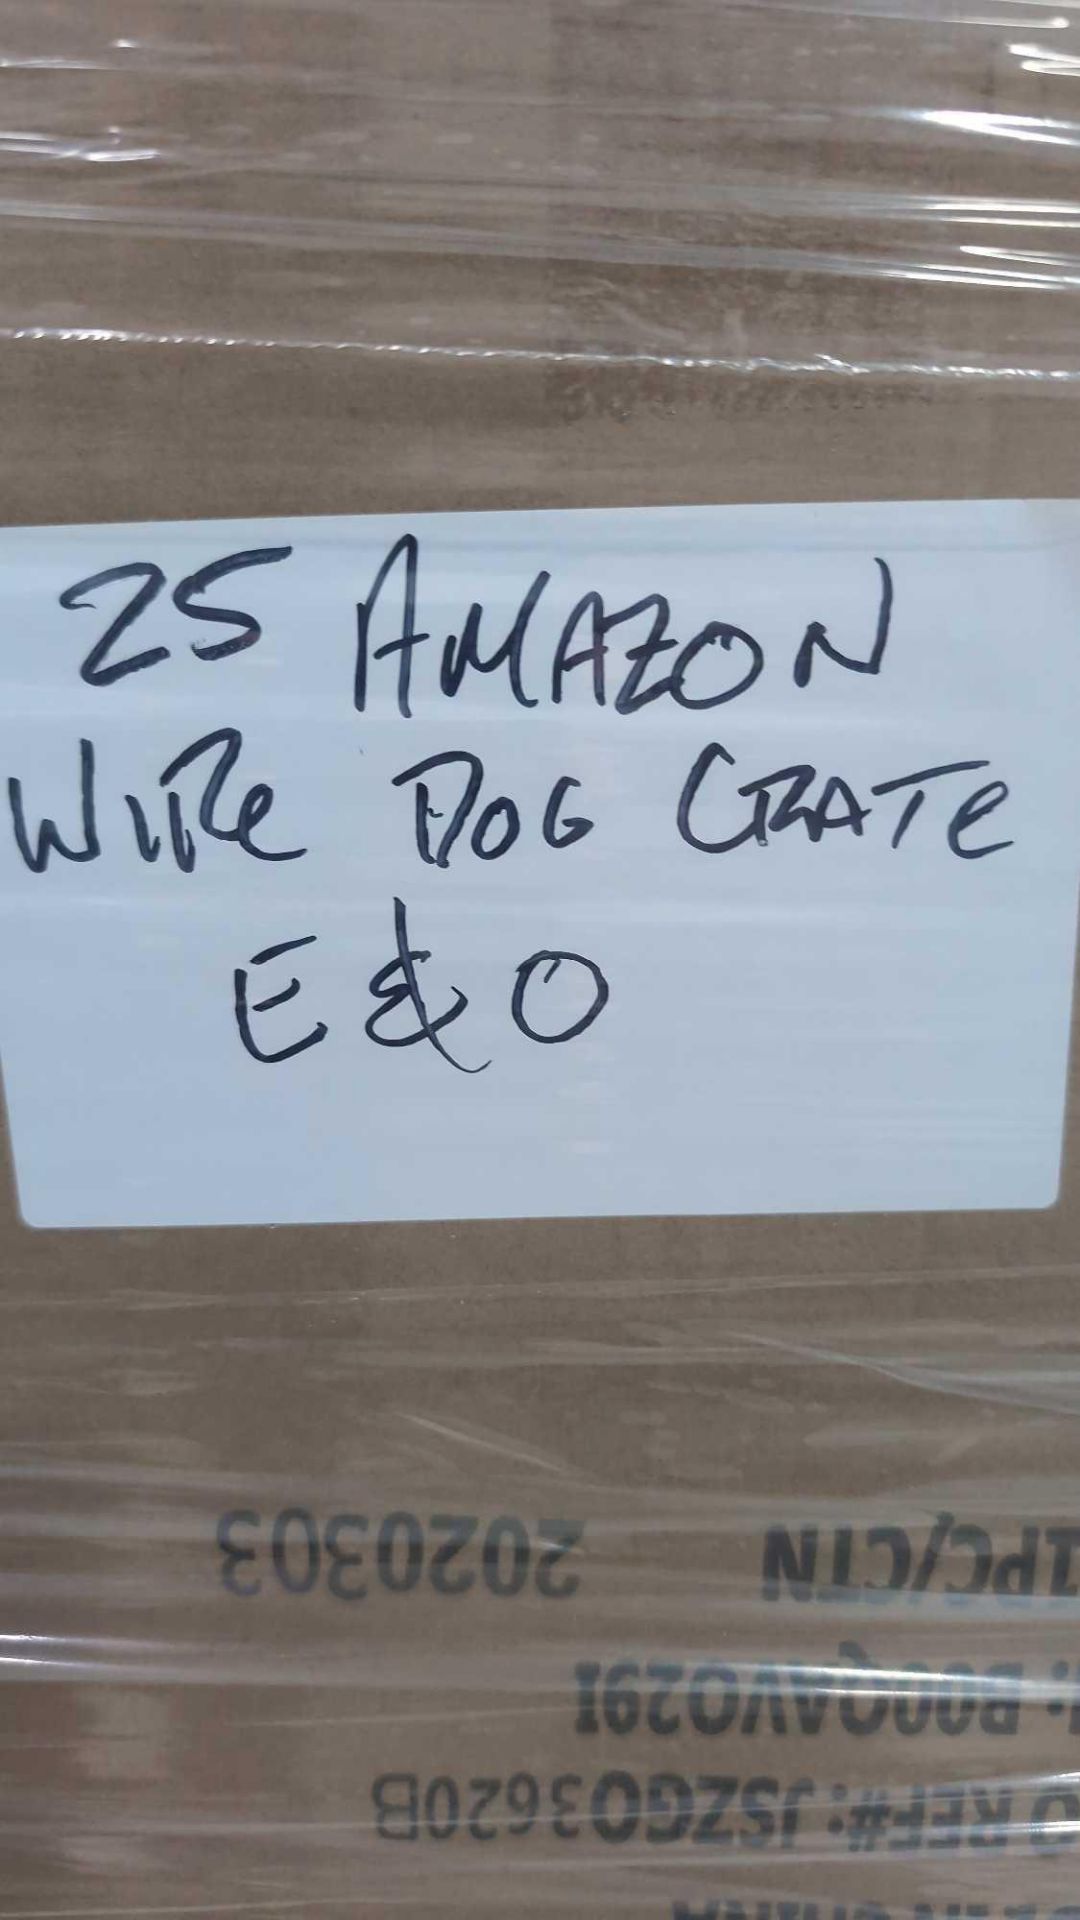 25 Amazon Wire Dog Crates - Image 4 of 4